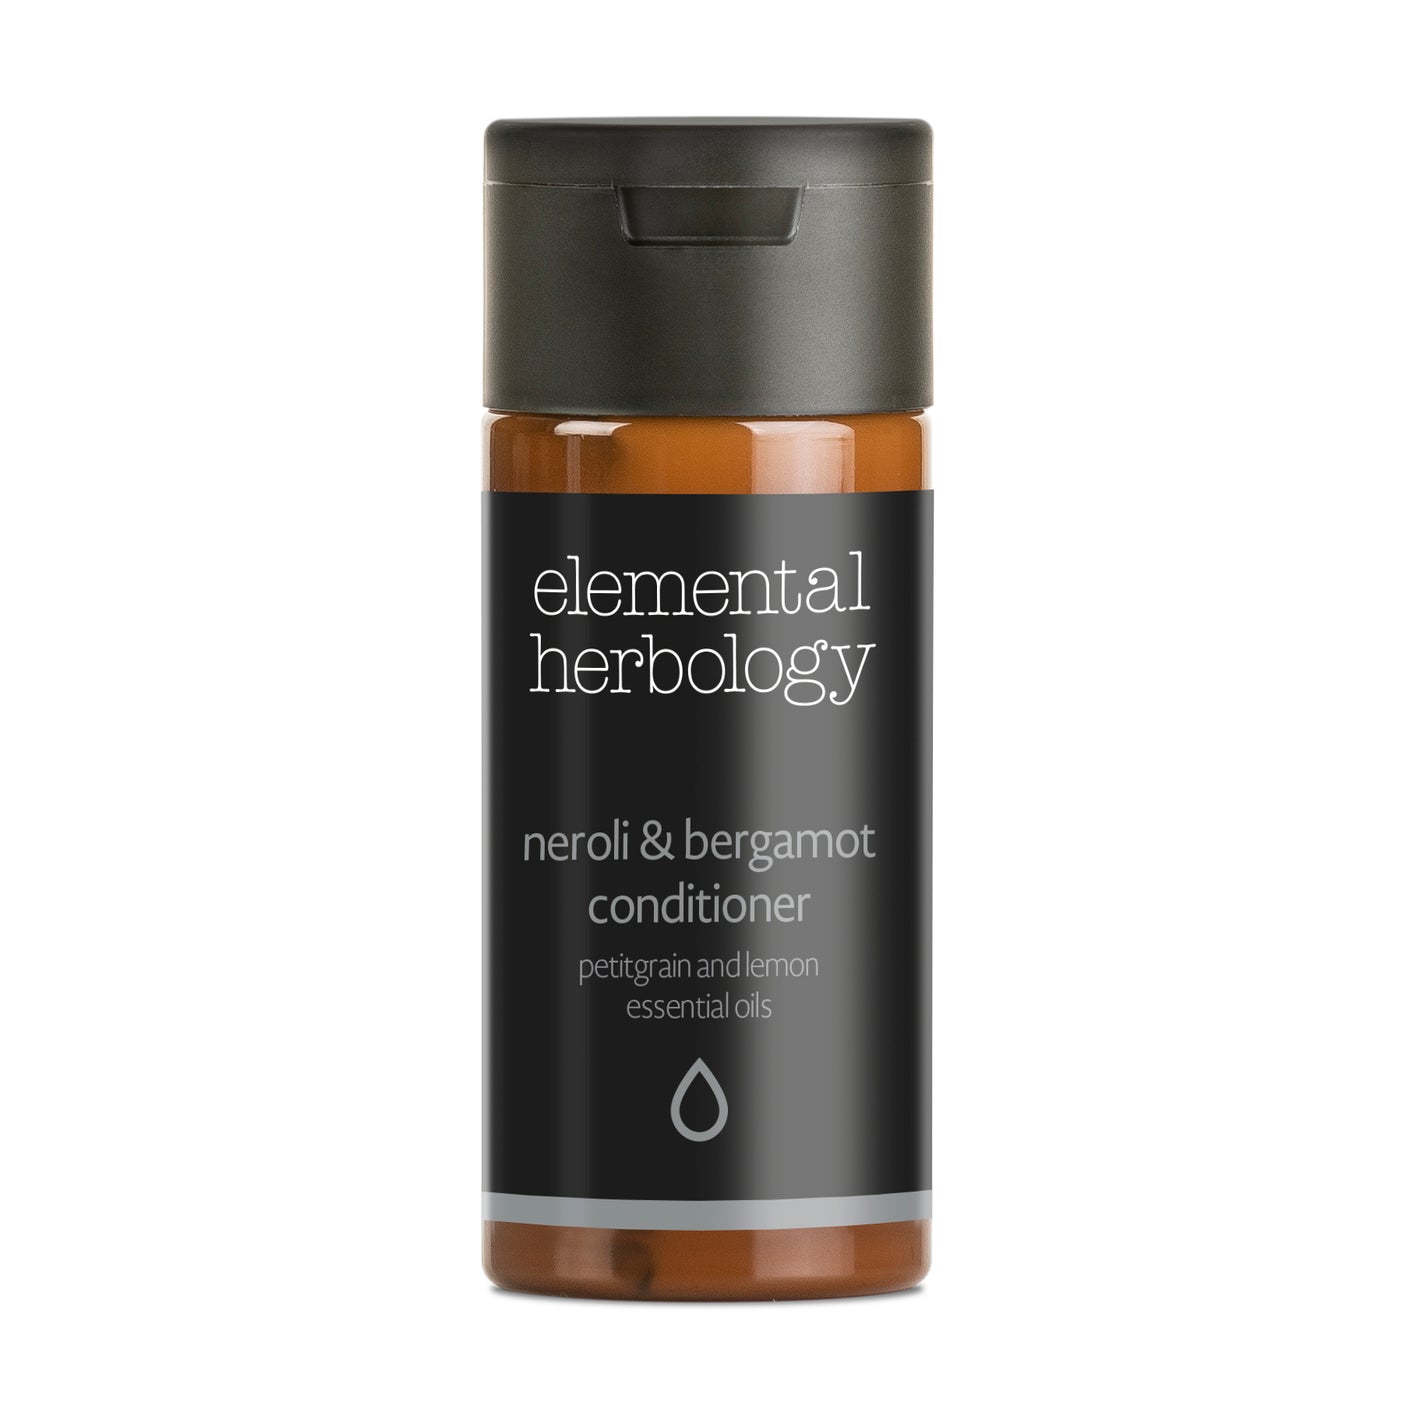 Elemental Herbology neroli and bergamot conditioner in miniature 40ml bottle